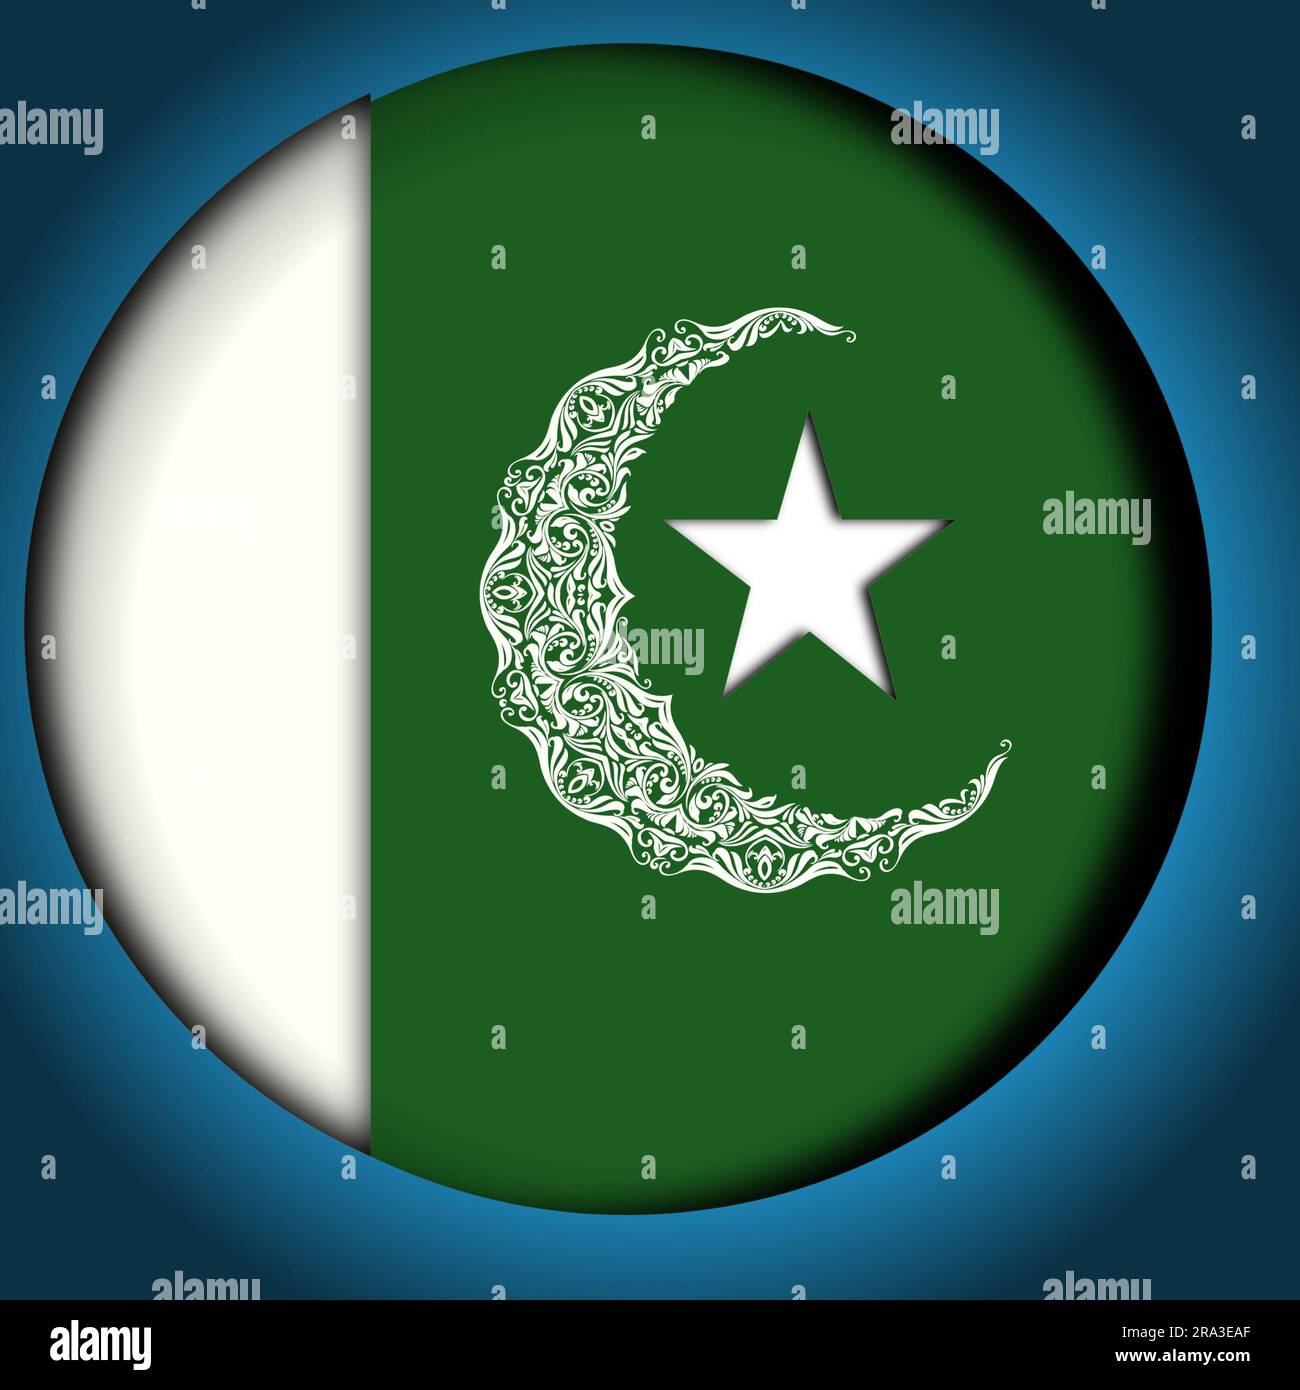 Pakistani flag badge download in hd Stock Photo